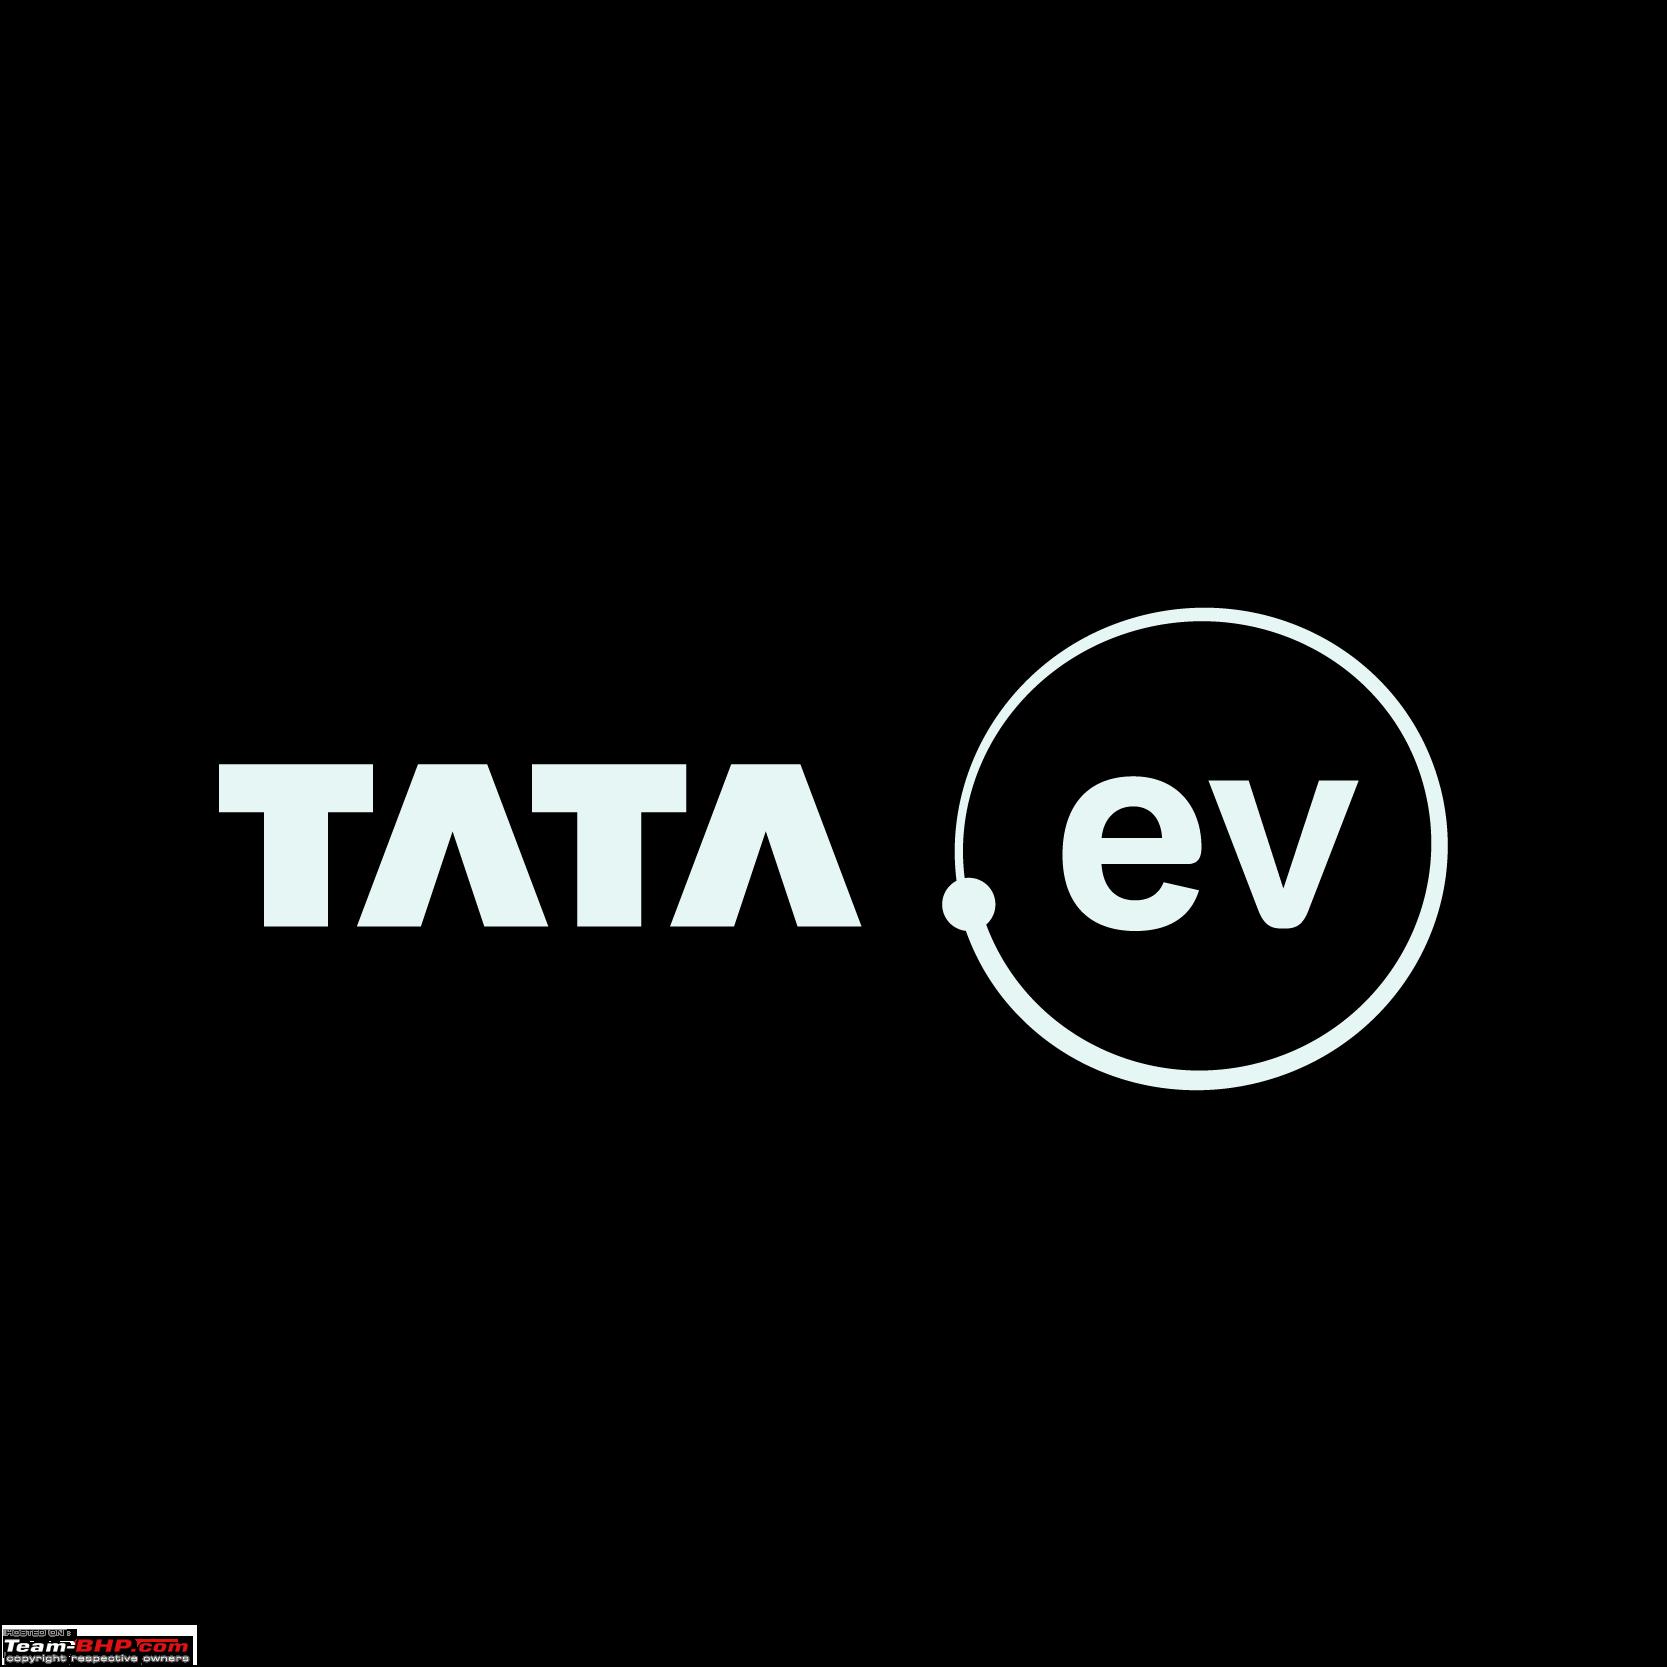 Tata Motors emblem stickers in custom colors and sizes